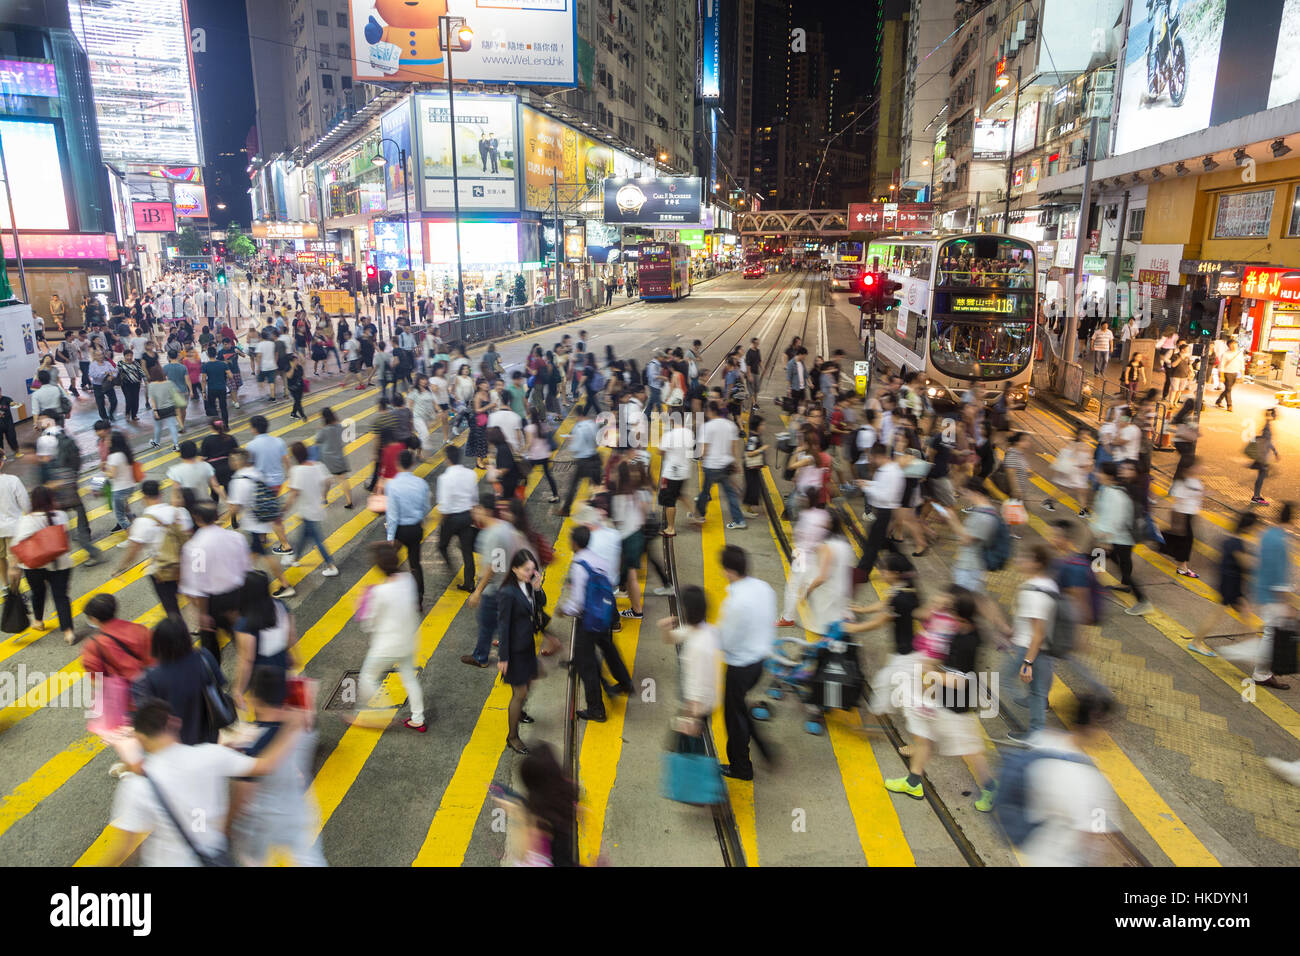 HONG KONG, HONG KONG - SEPTEMBER 23 2015: Pedestrians rush through a very busy intersection in the shopping district of Causeway Bay in Hong Kong isla Stock Photo